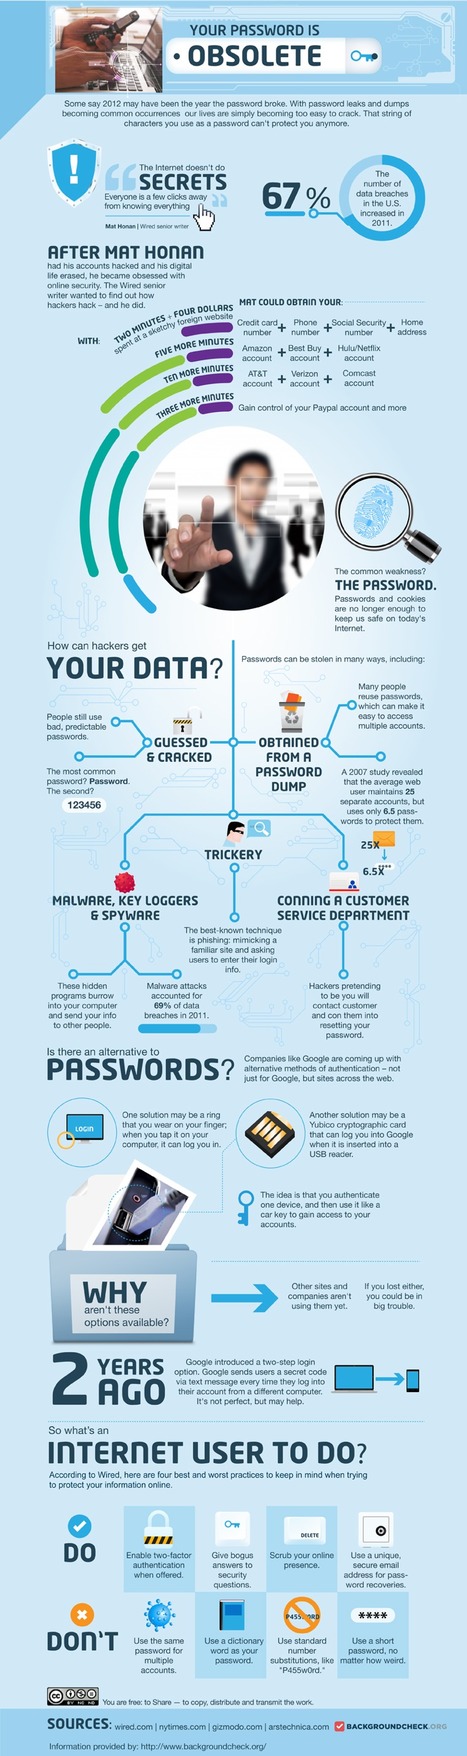 Passwords, Security and the Future of Authentication [#Infographic] | omnia mea mecum fero | Scoop.it